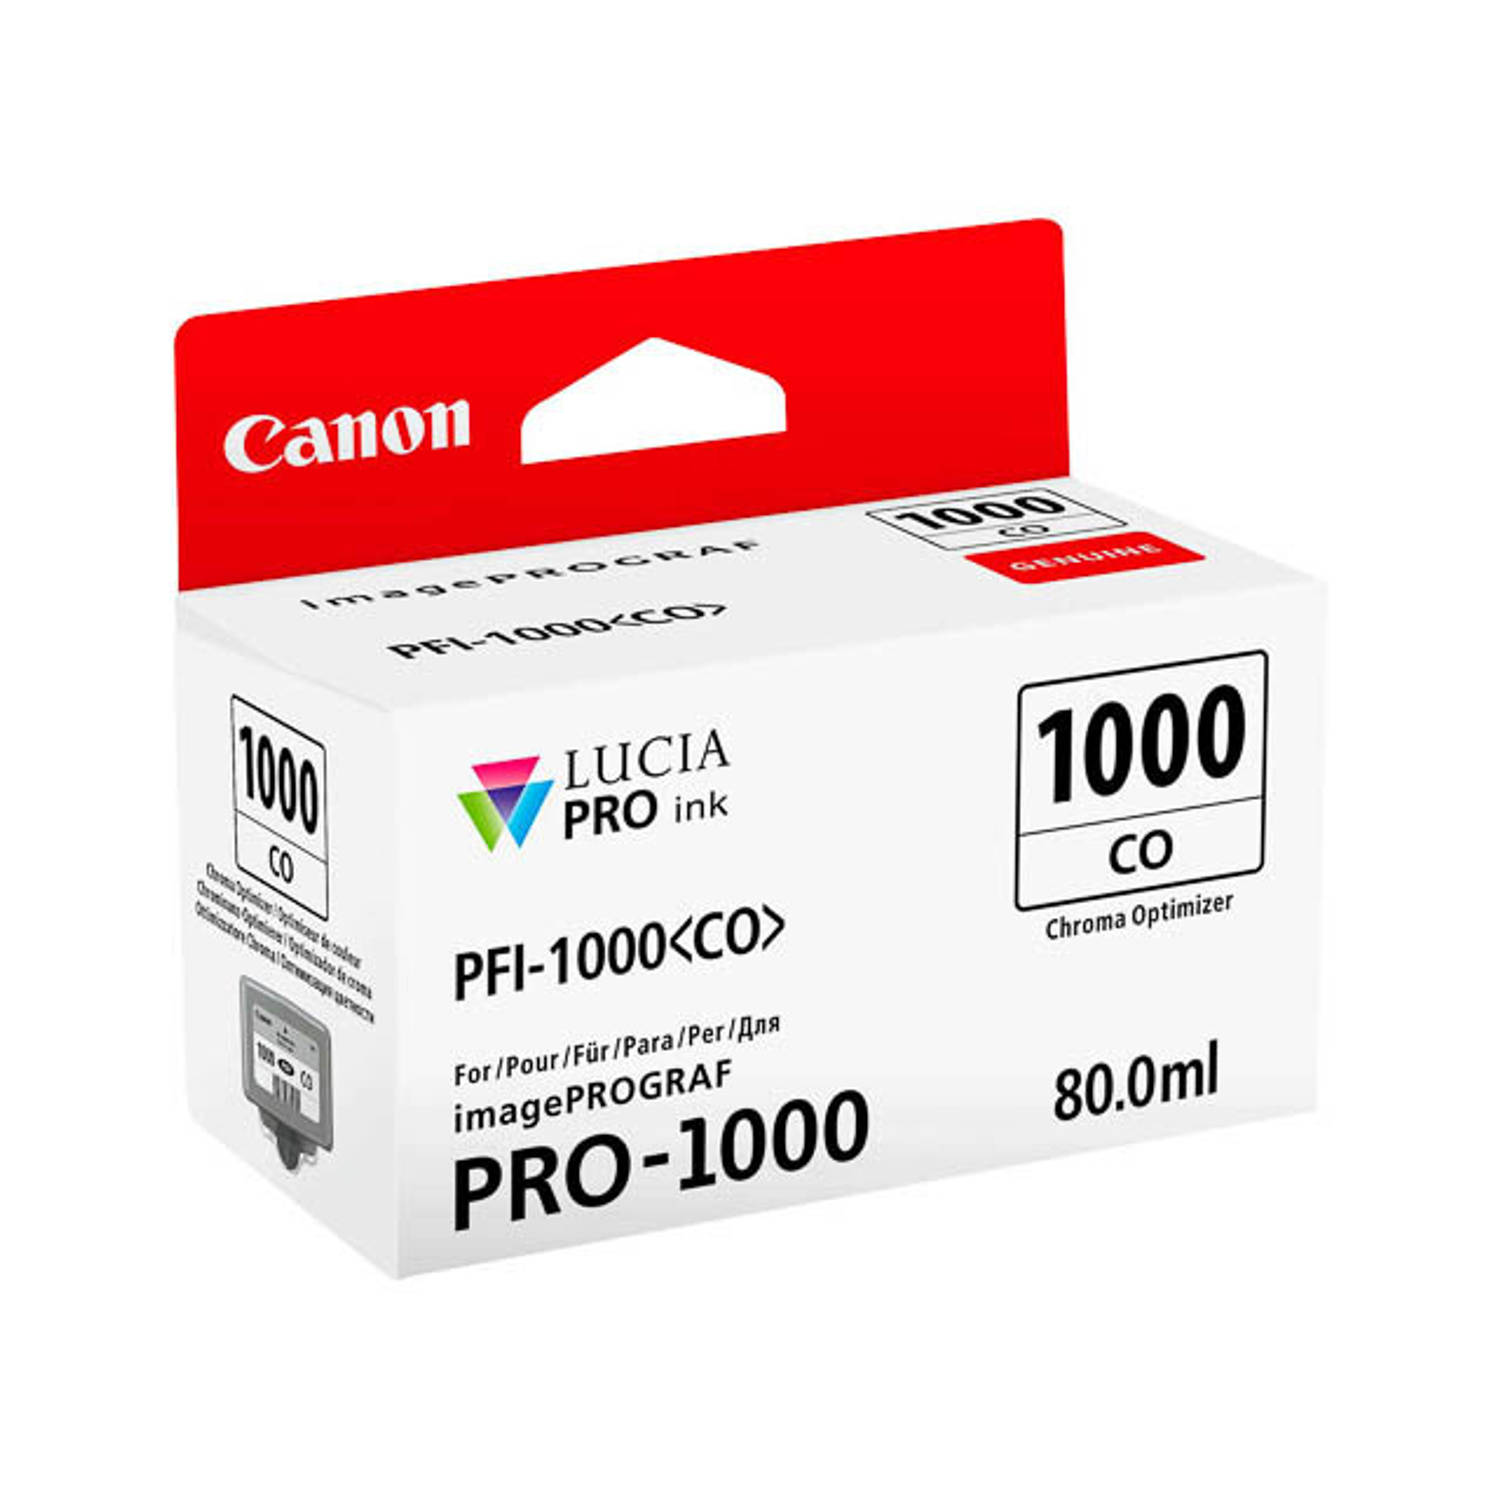 Canon PFI-1000 CO Chroma Optimizer